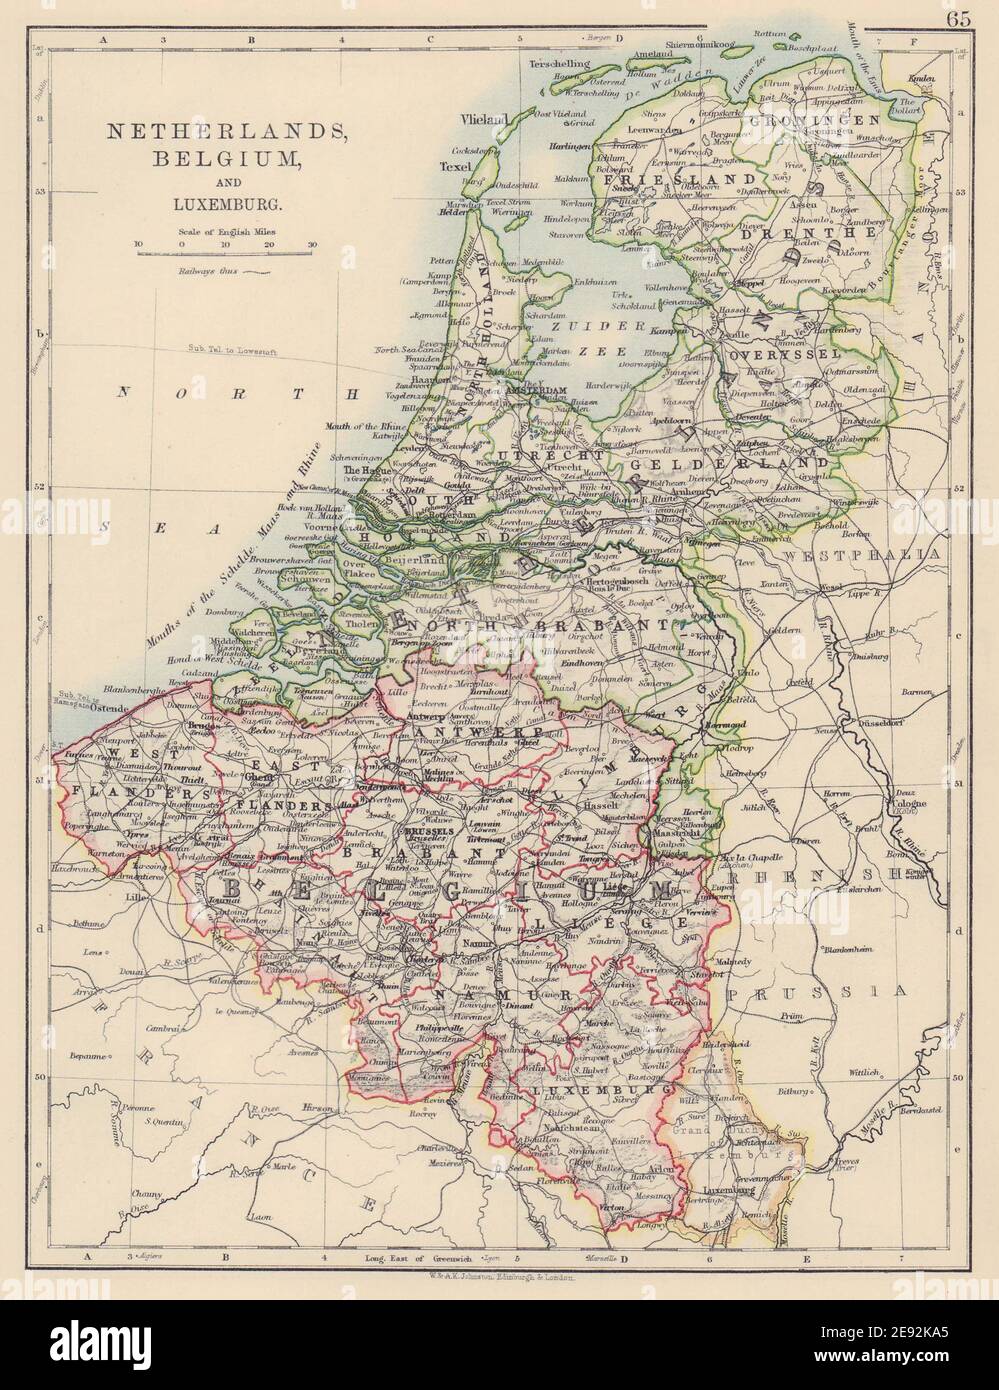 BENELUX. Netherlands Belgium Luxemburg. Holland. JOHNSTON 1901 old antique map Stock Photo